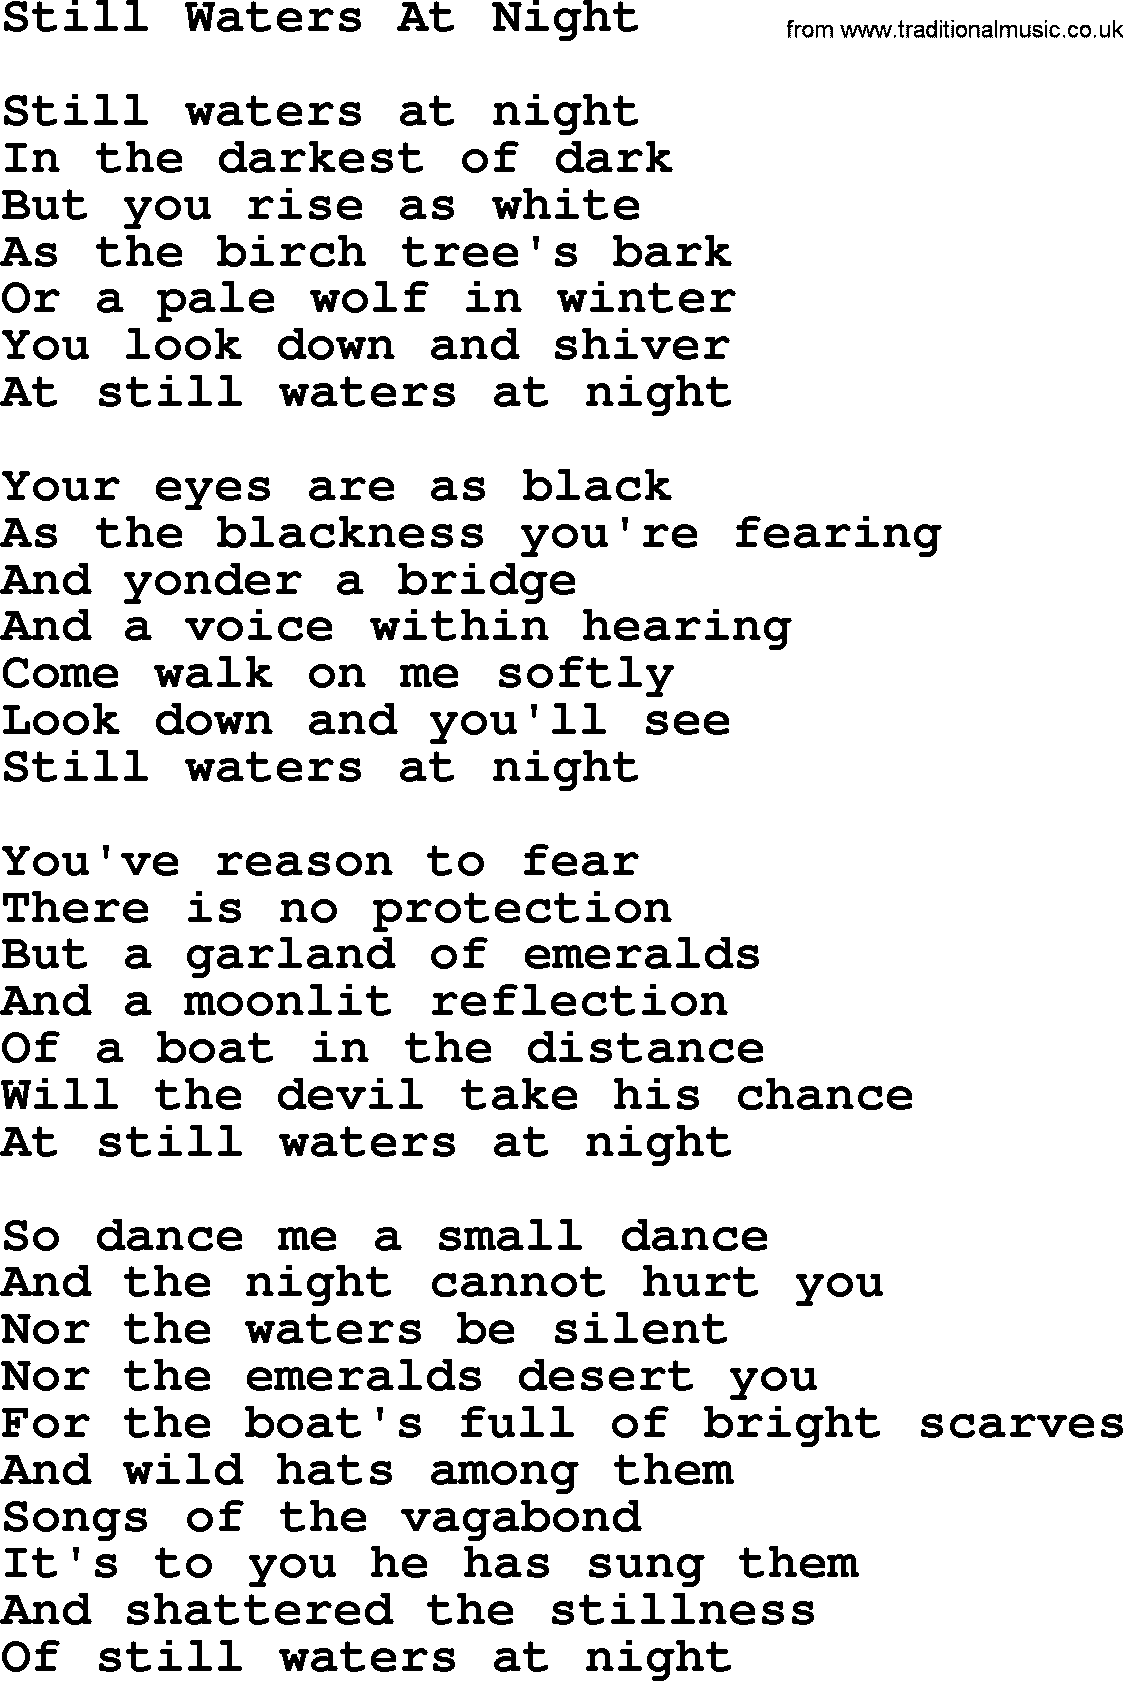 Joan Baez song Still Waters At Night, lyrics